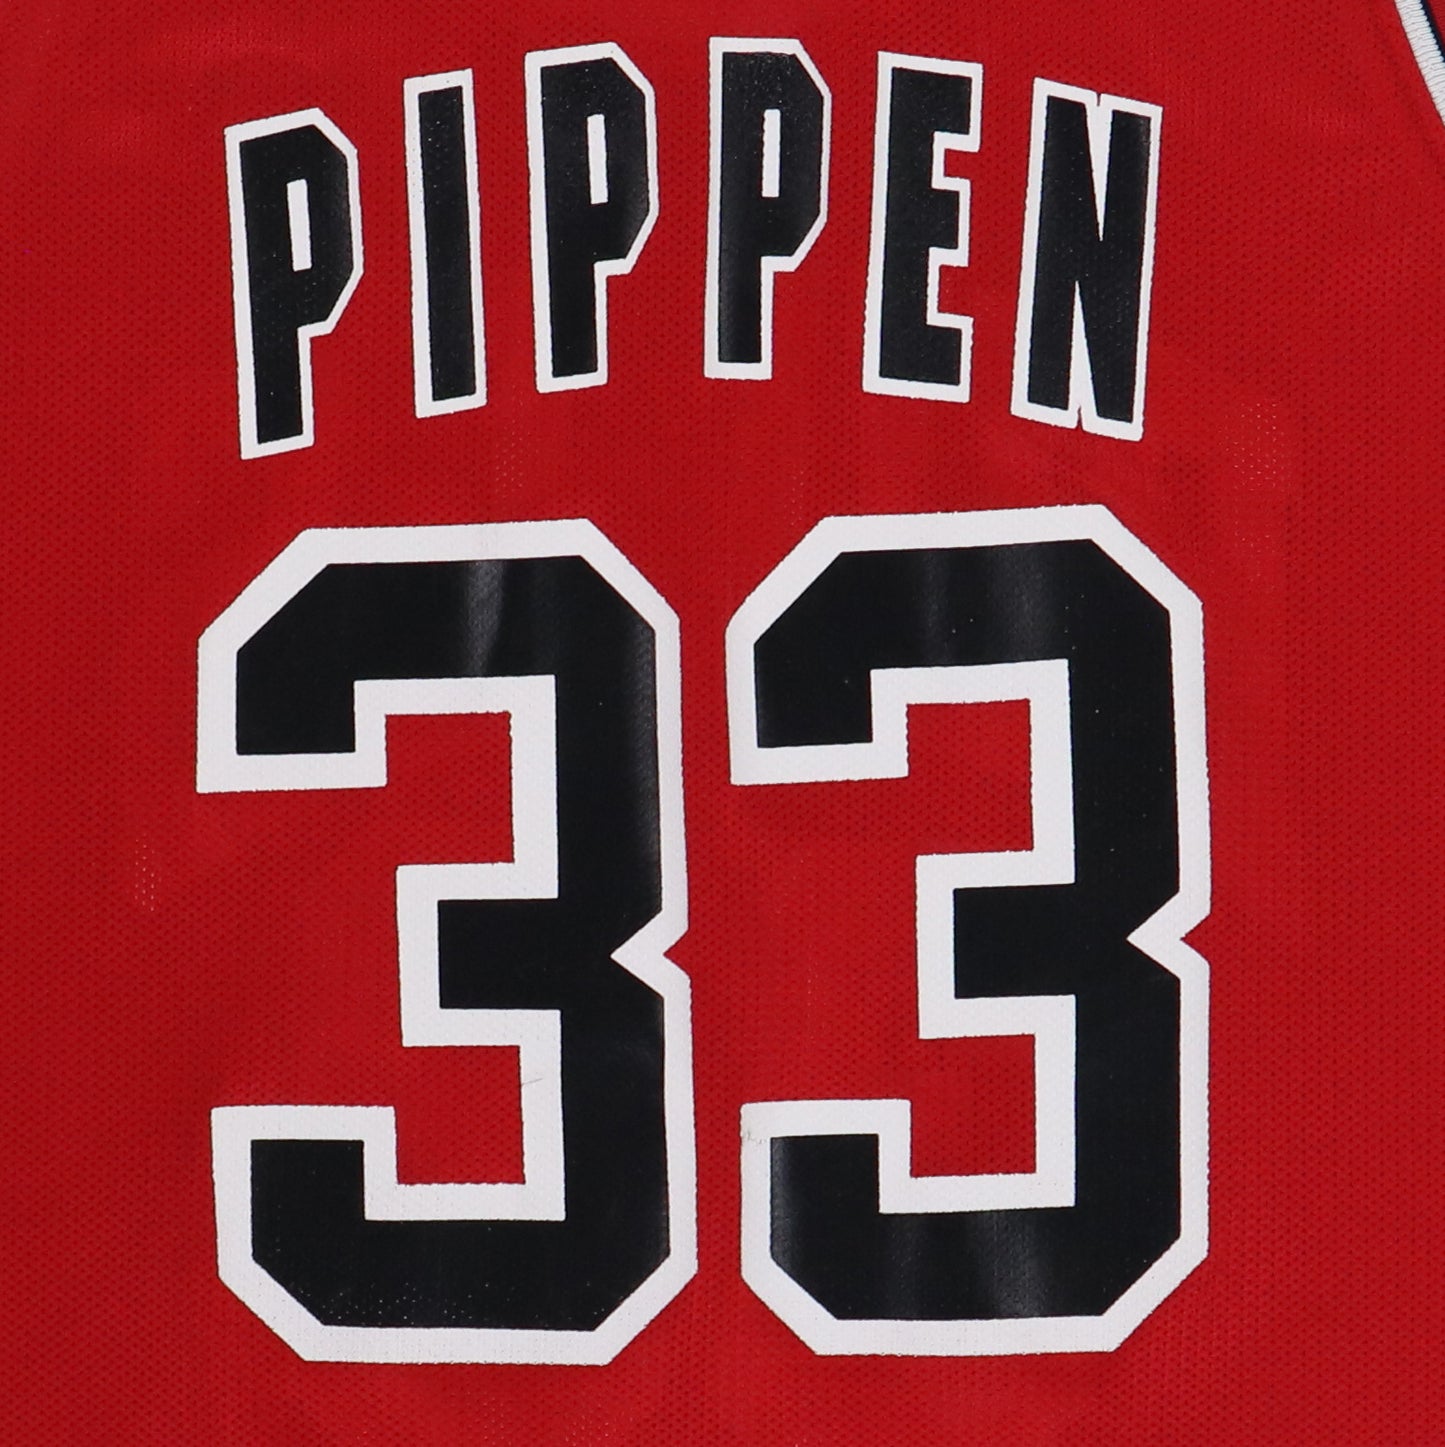 Wyco Vintage 1990s Scottie Pippen Chicago Bulls NBA Basketball Jersey